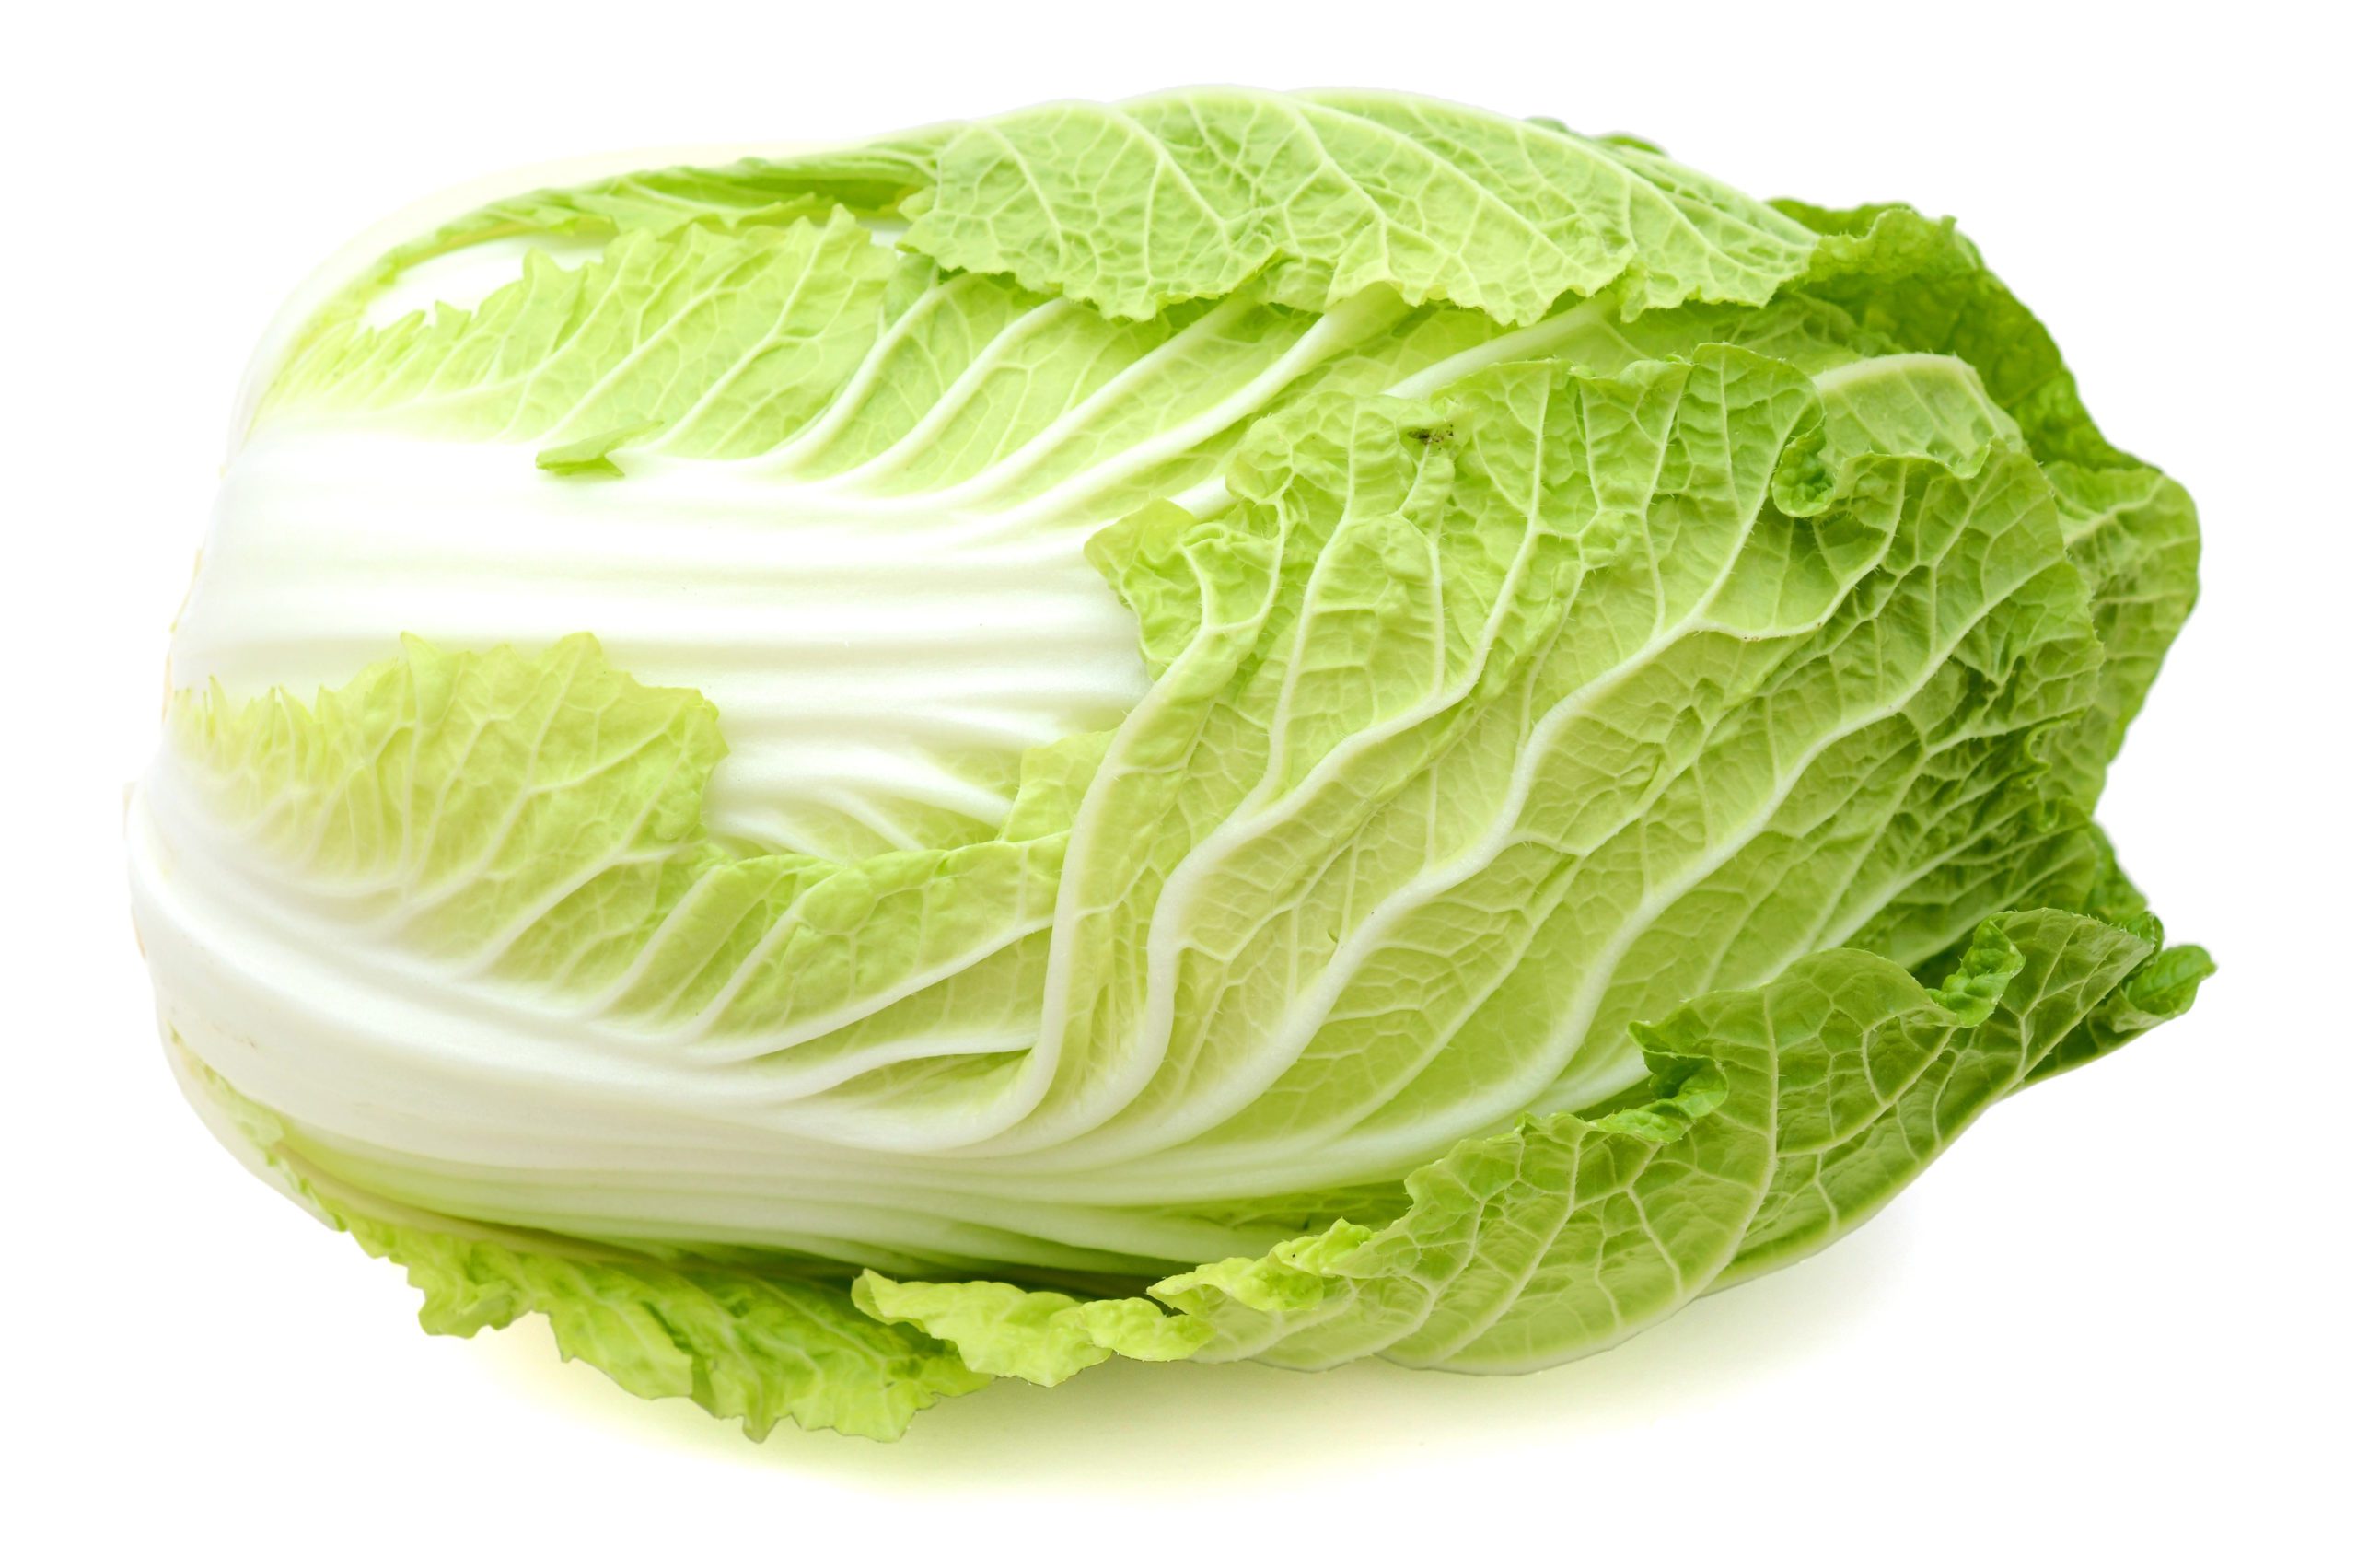 Napa Cabbage Image